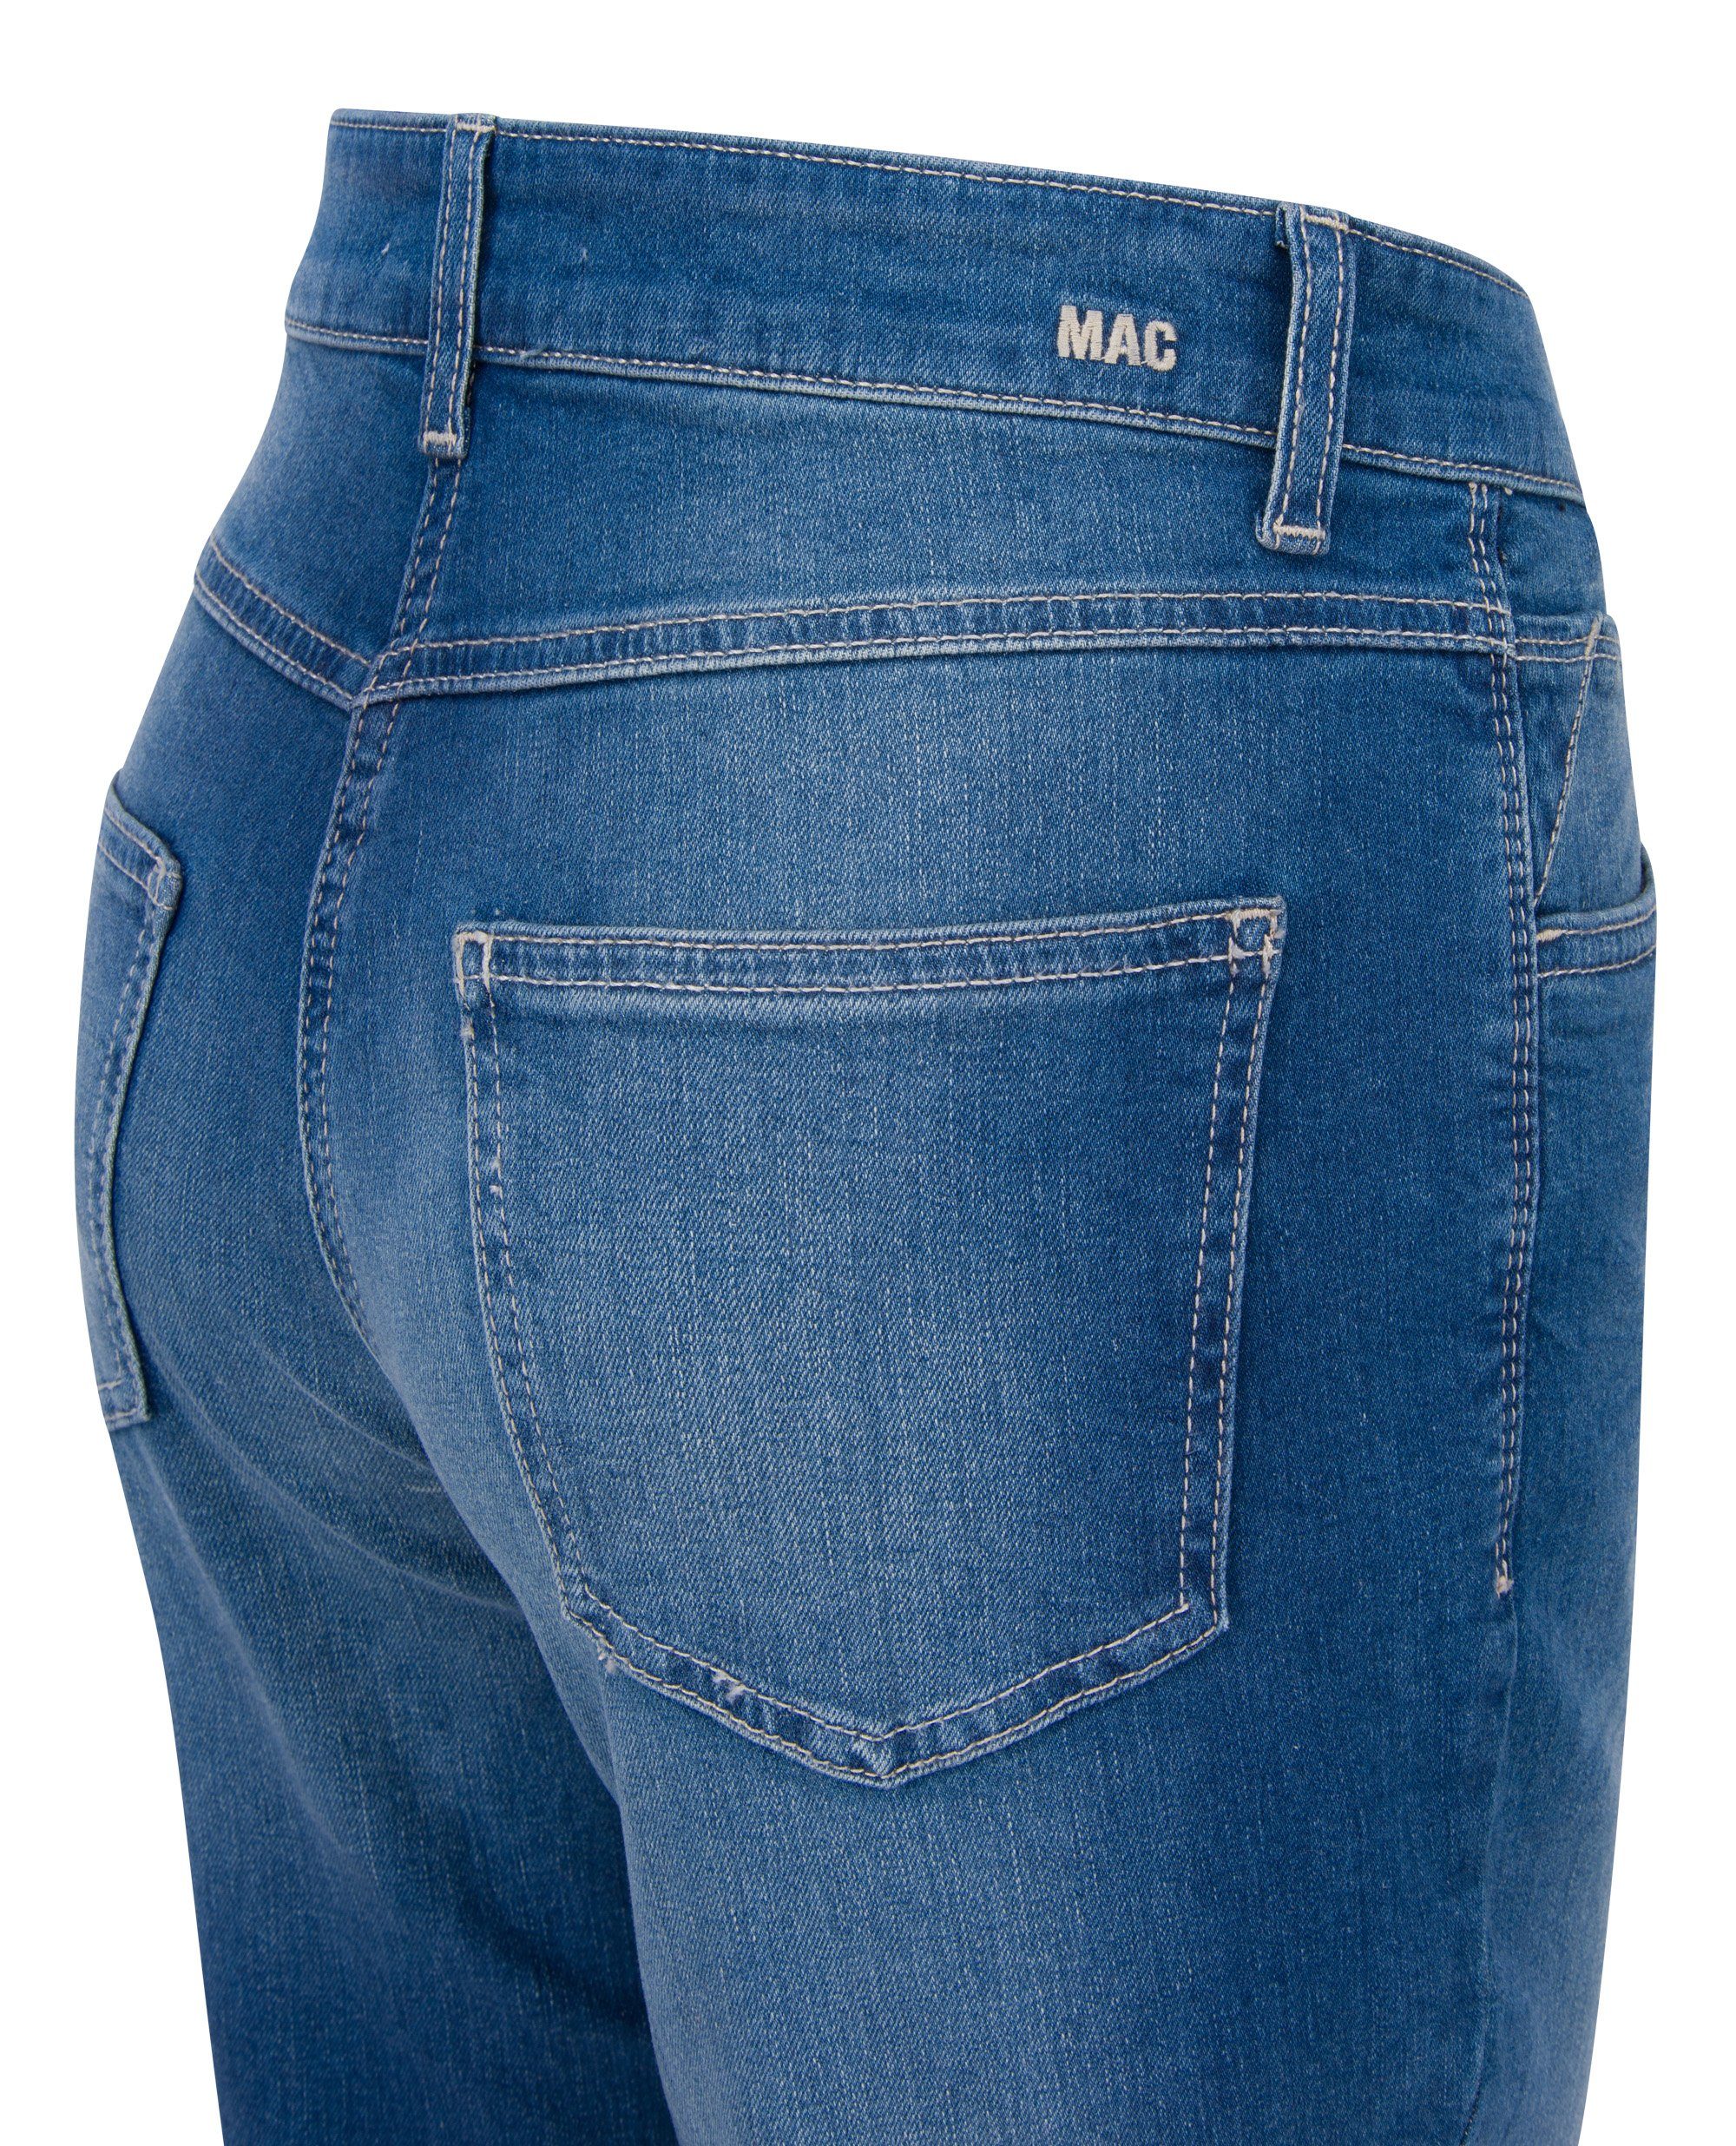 MELANIE MAC Stretch-Jeans new 5040-90-0386 mid blue D640 authentic MAC used